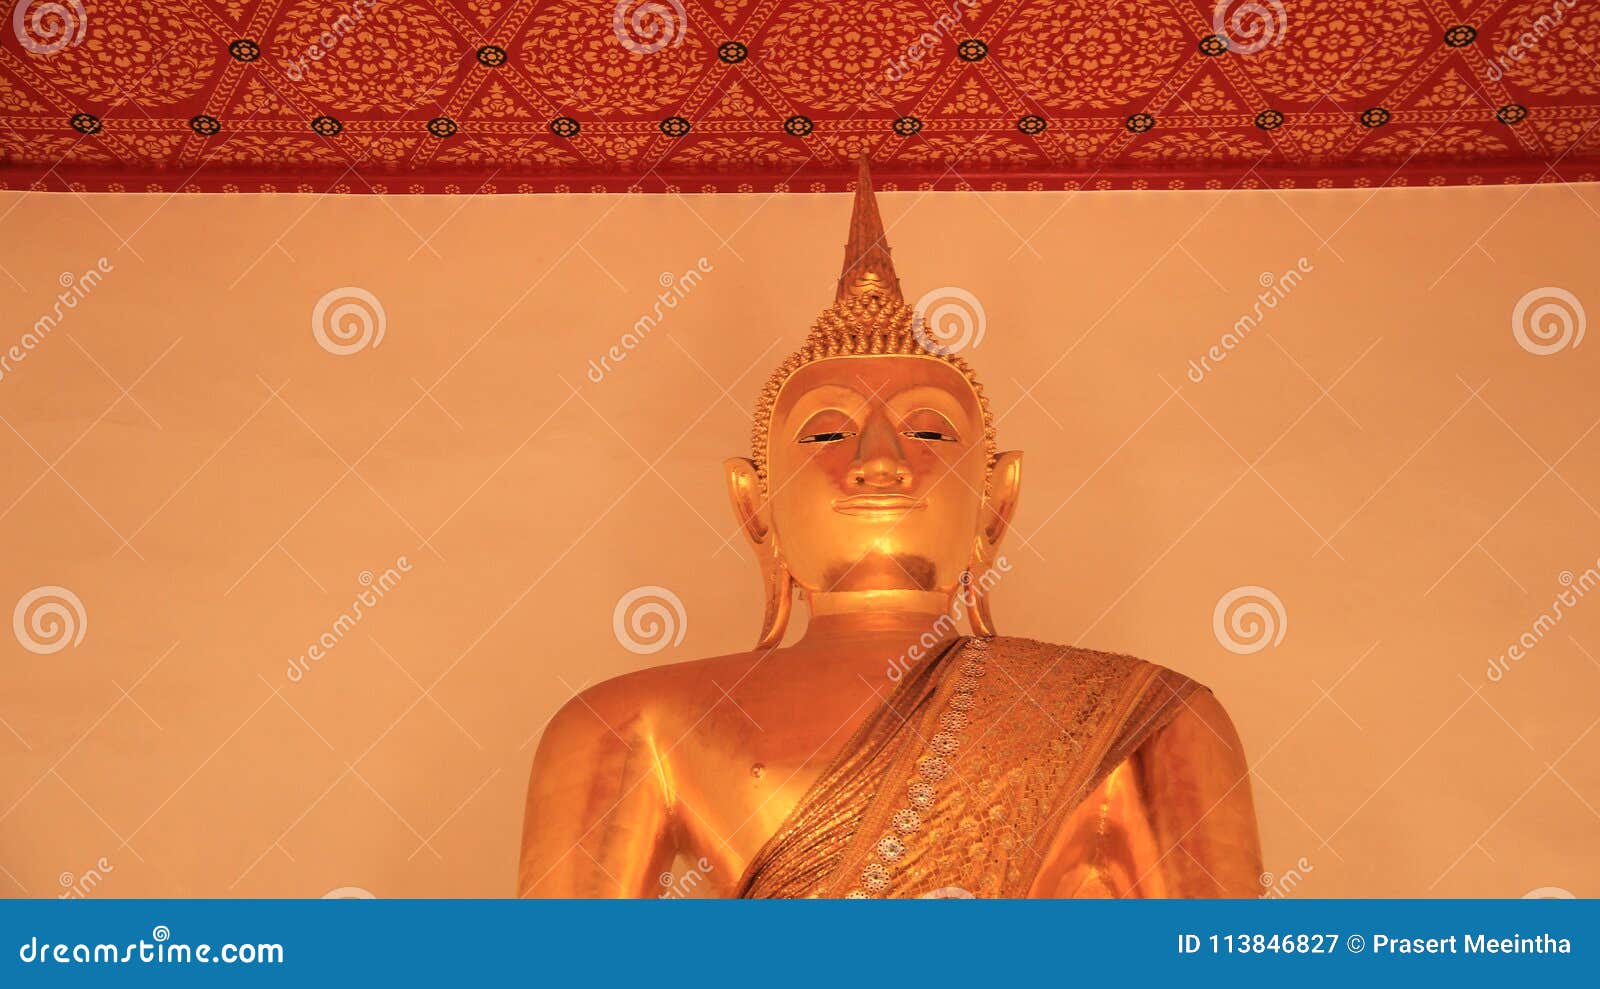 smilingly golden big buddha